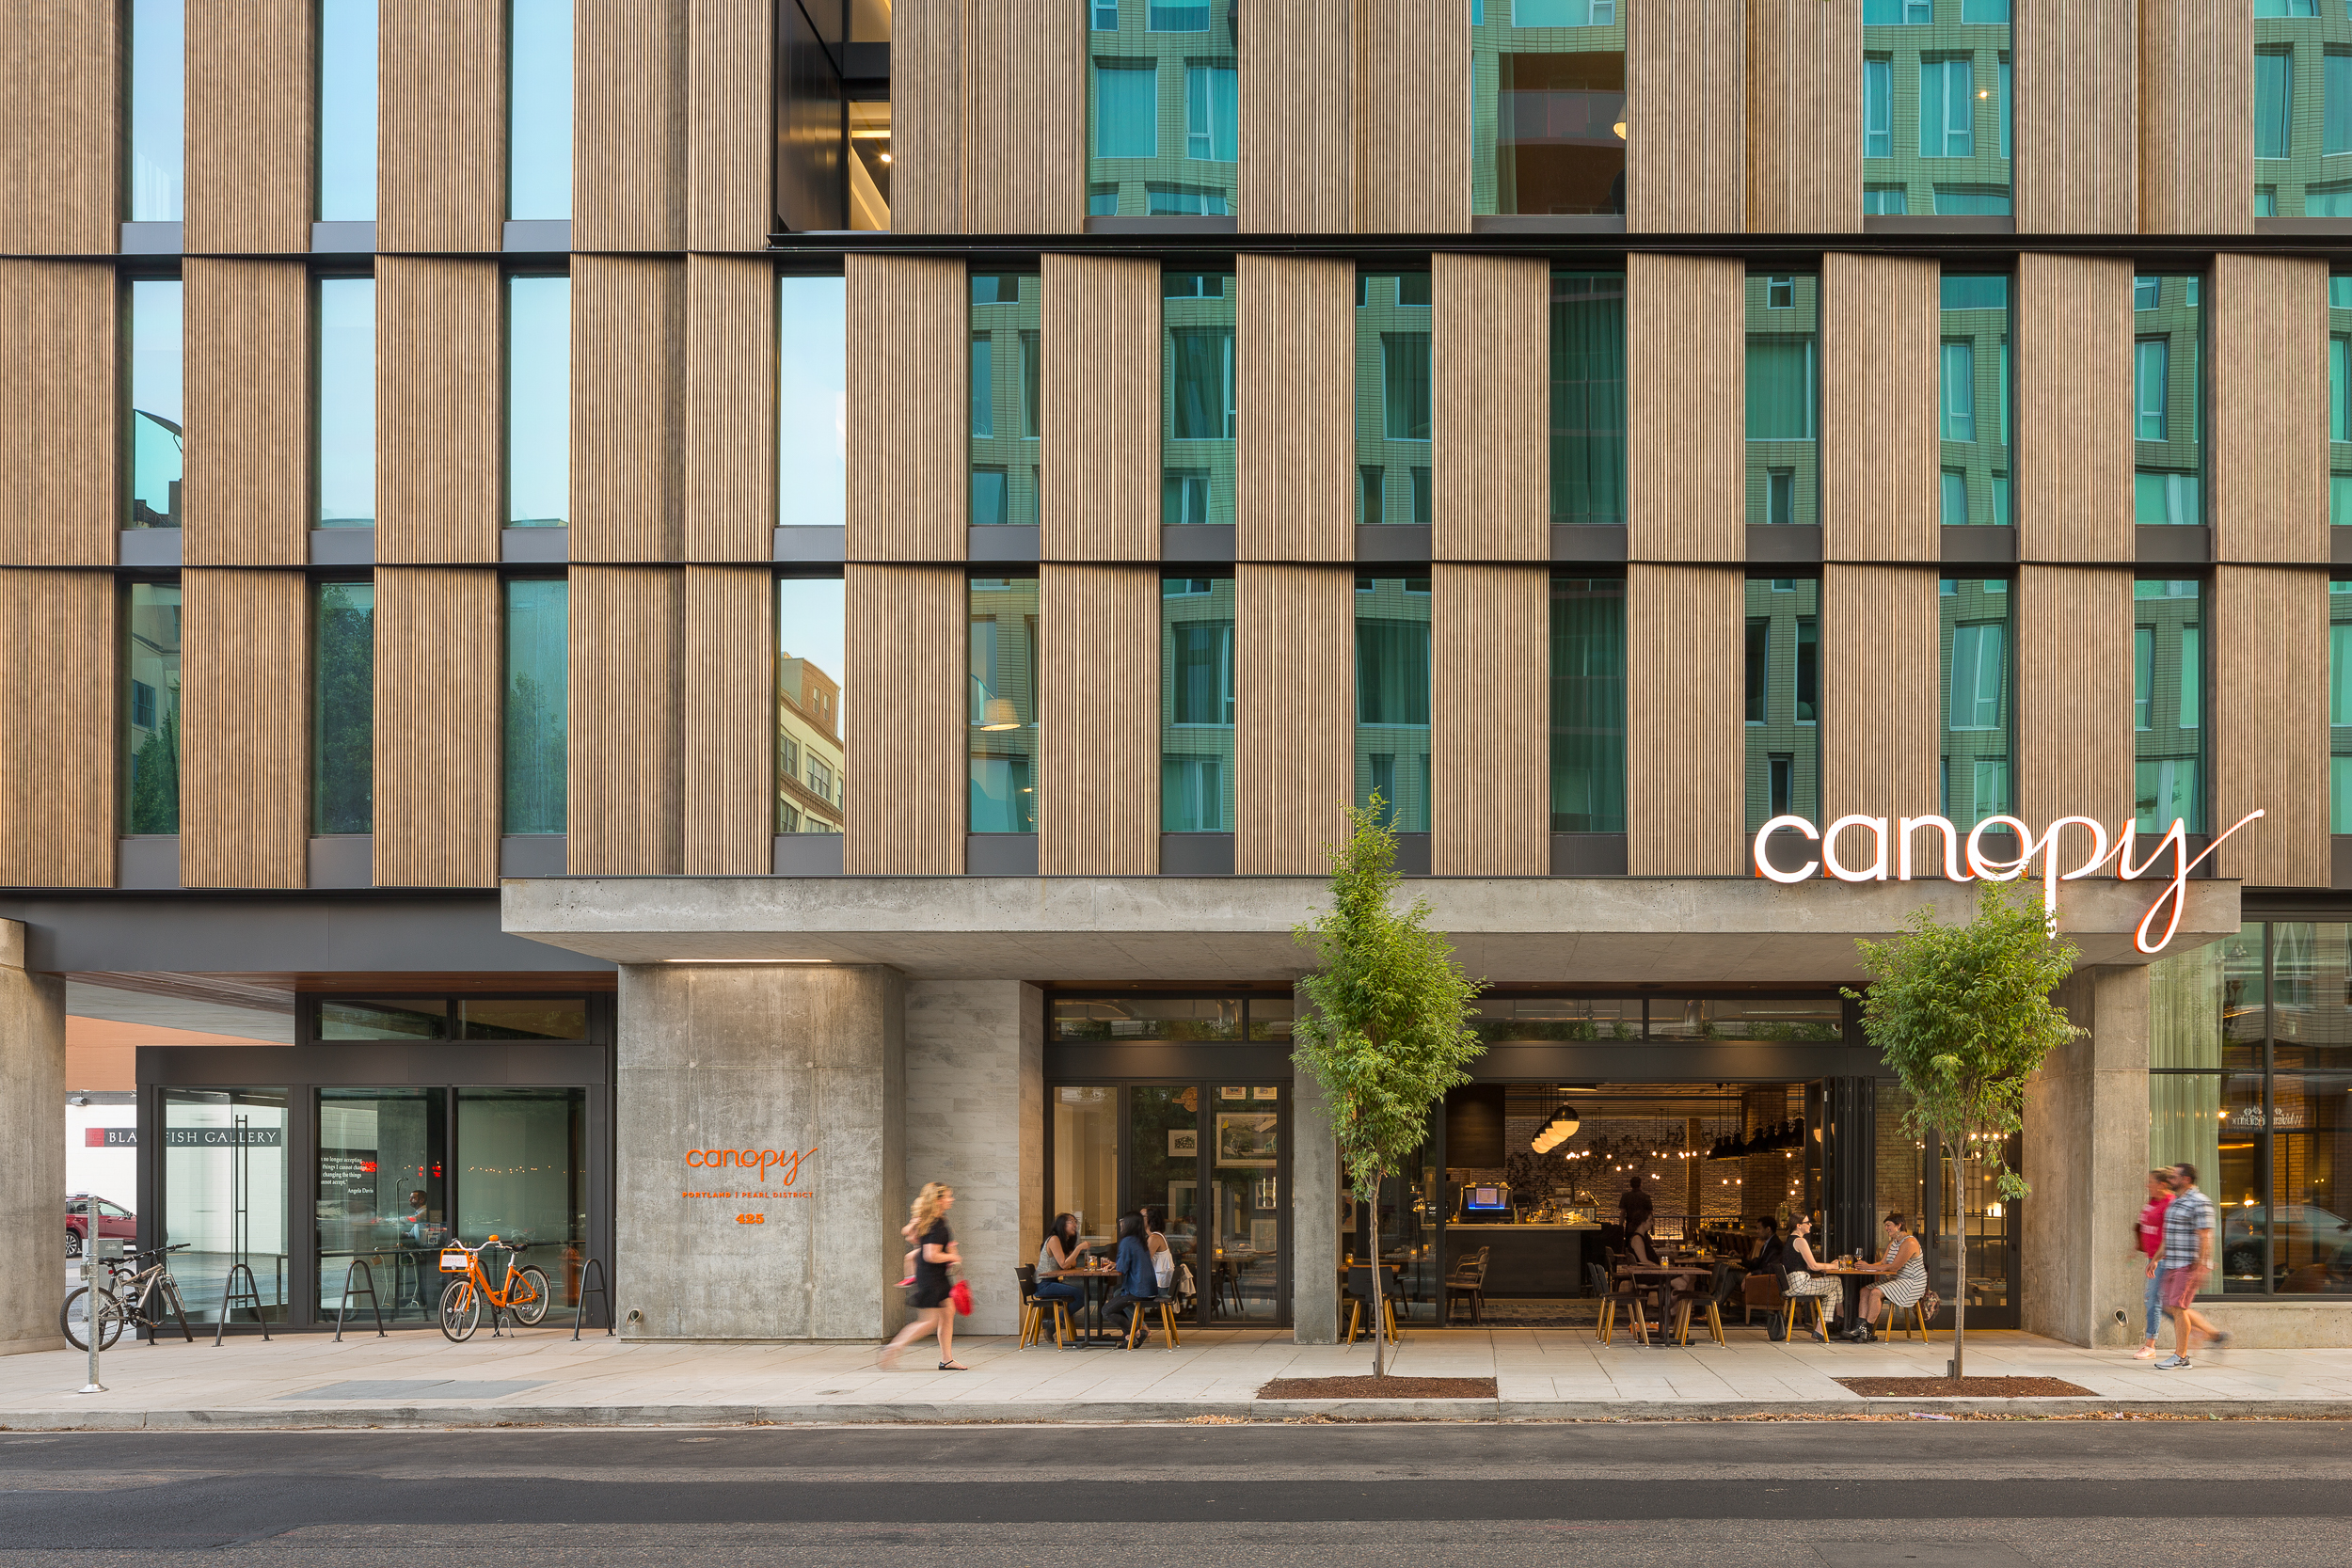  Canopy Hotel / ZGF Architects 